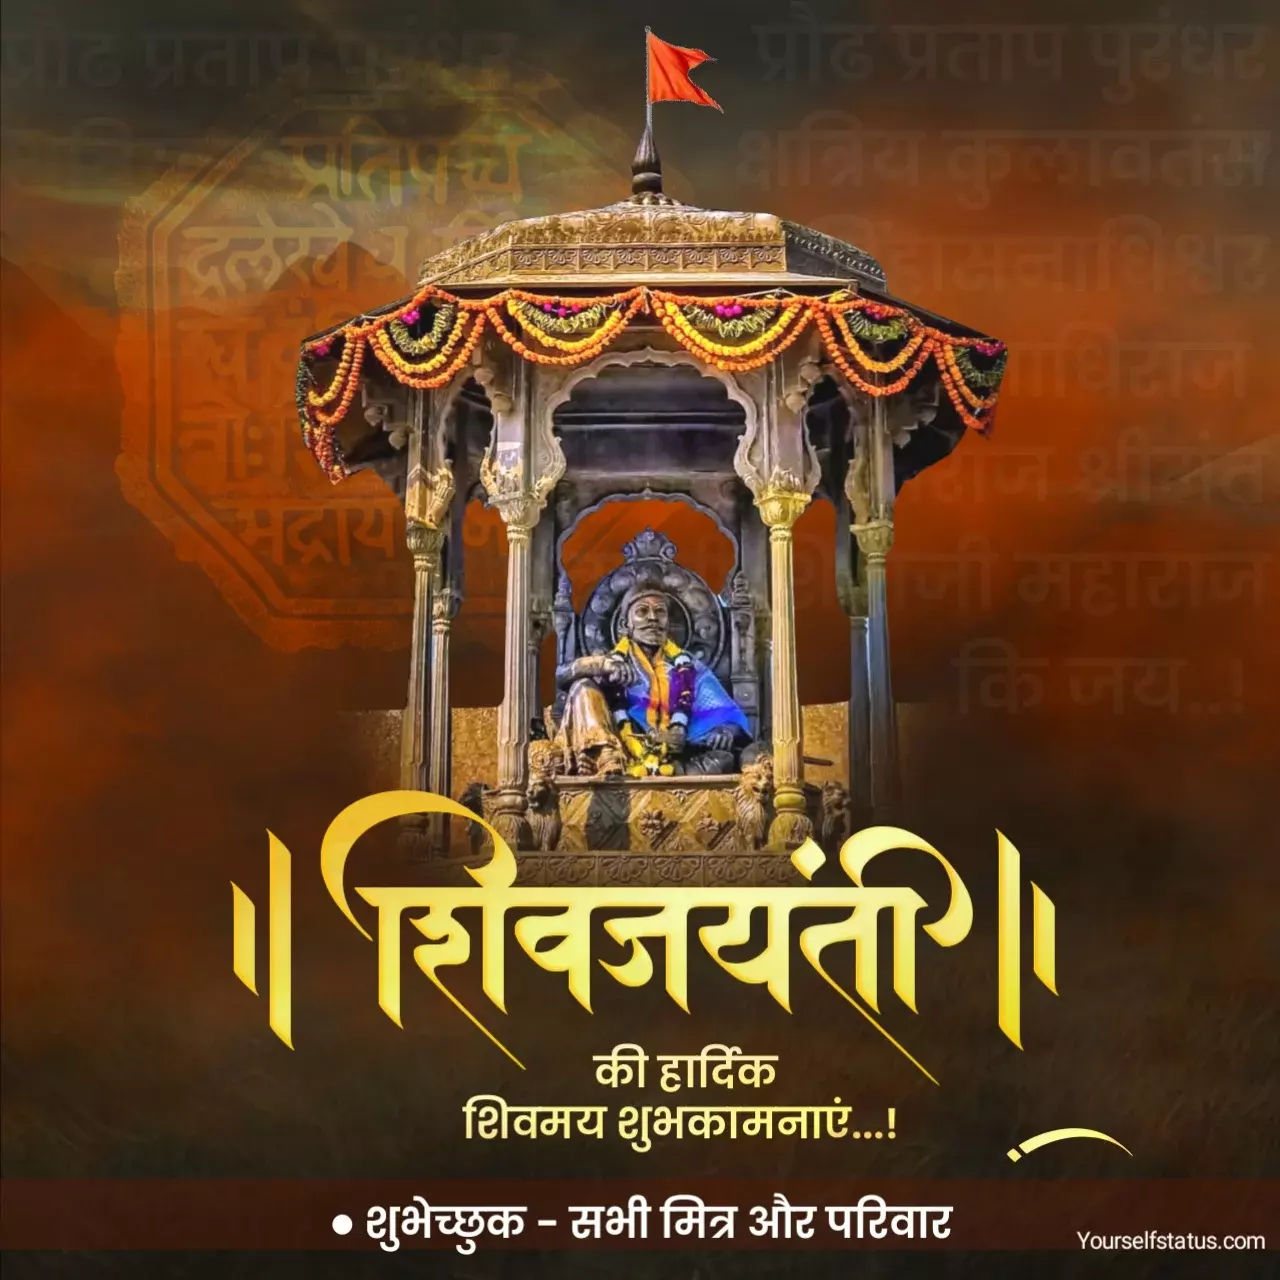 Chatrapati shivaji maharaj jayanti images in hindi